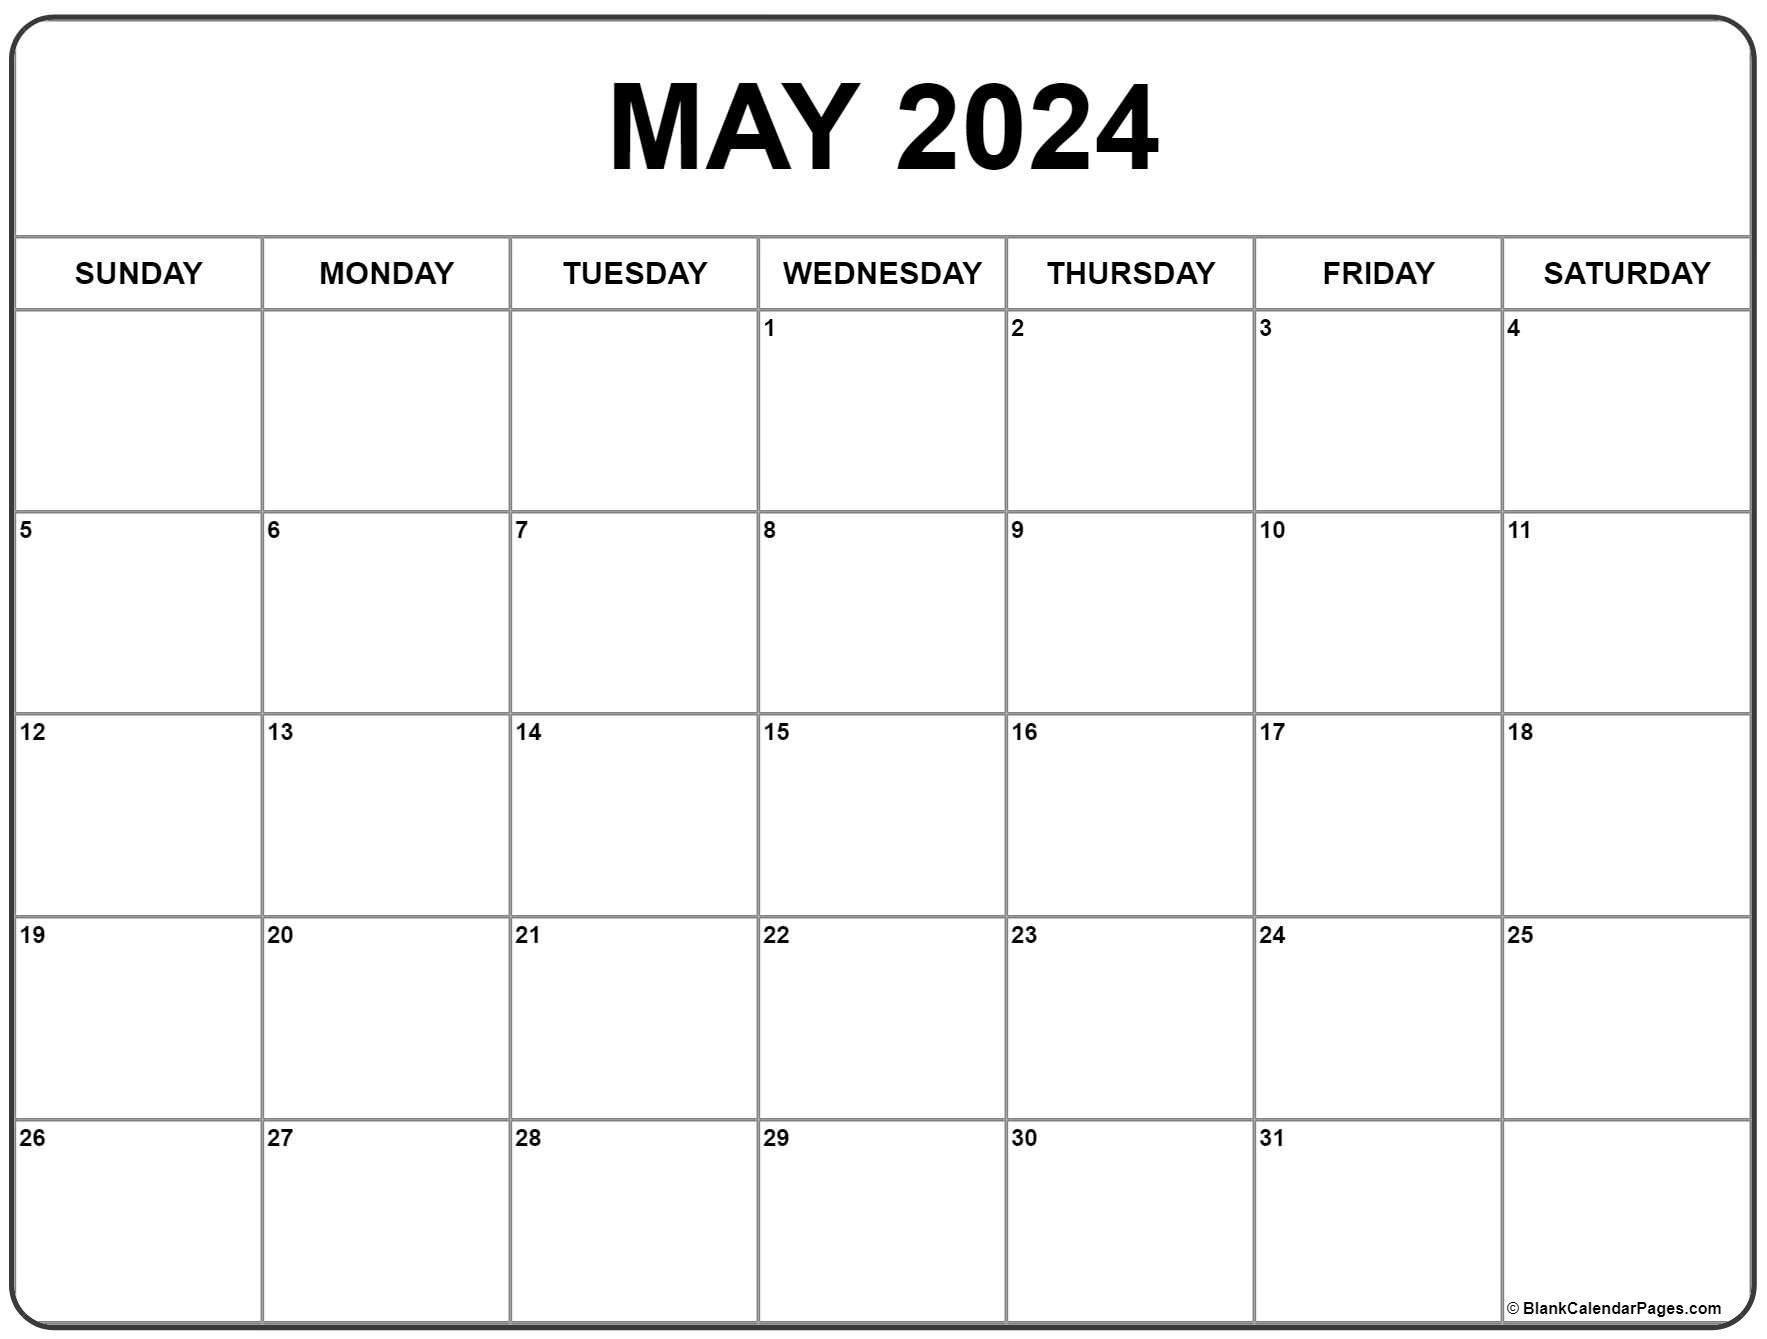 May 2024 Calendar | Free Printable Calendar | Printable Calendar May 2024 Free